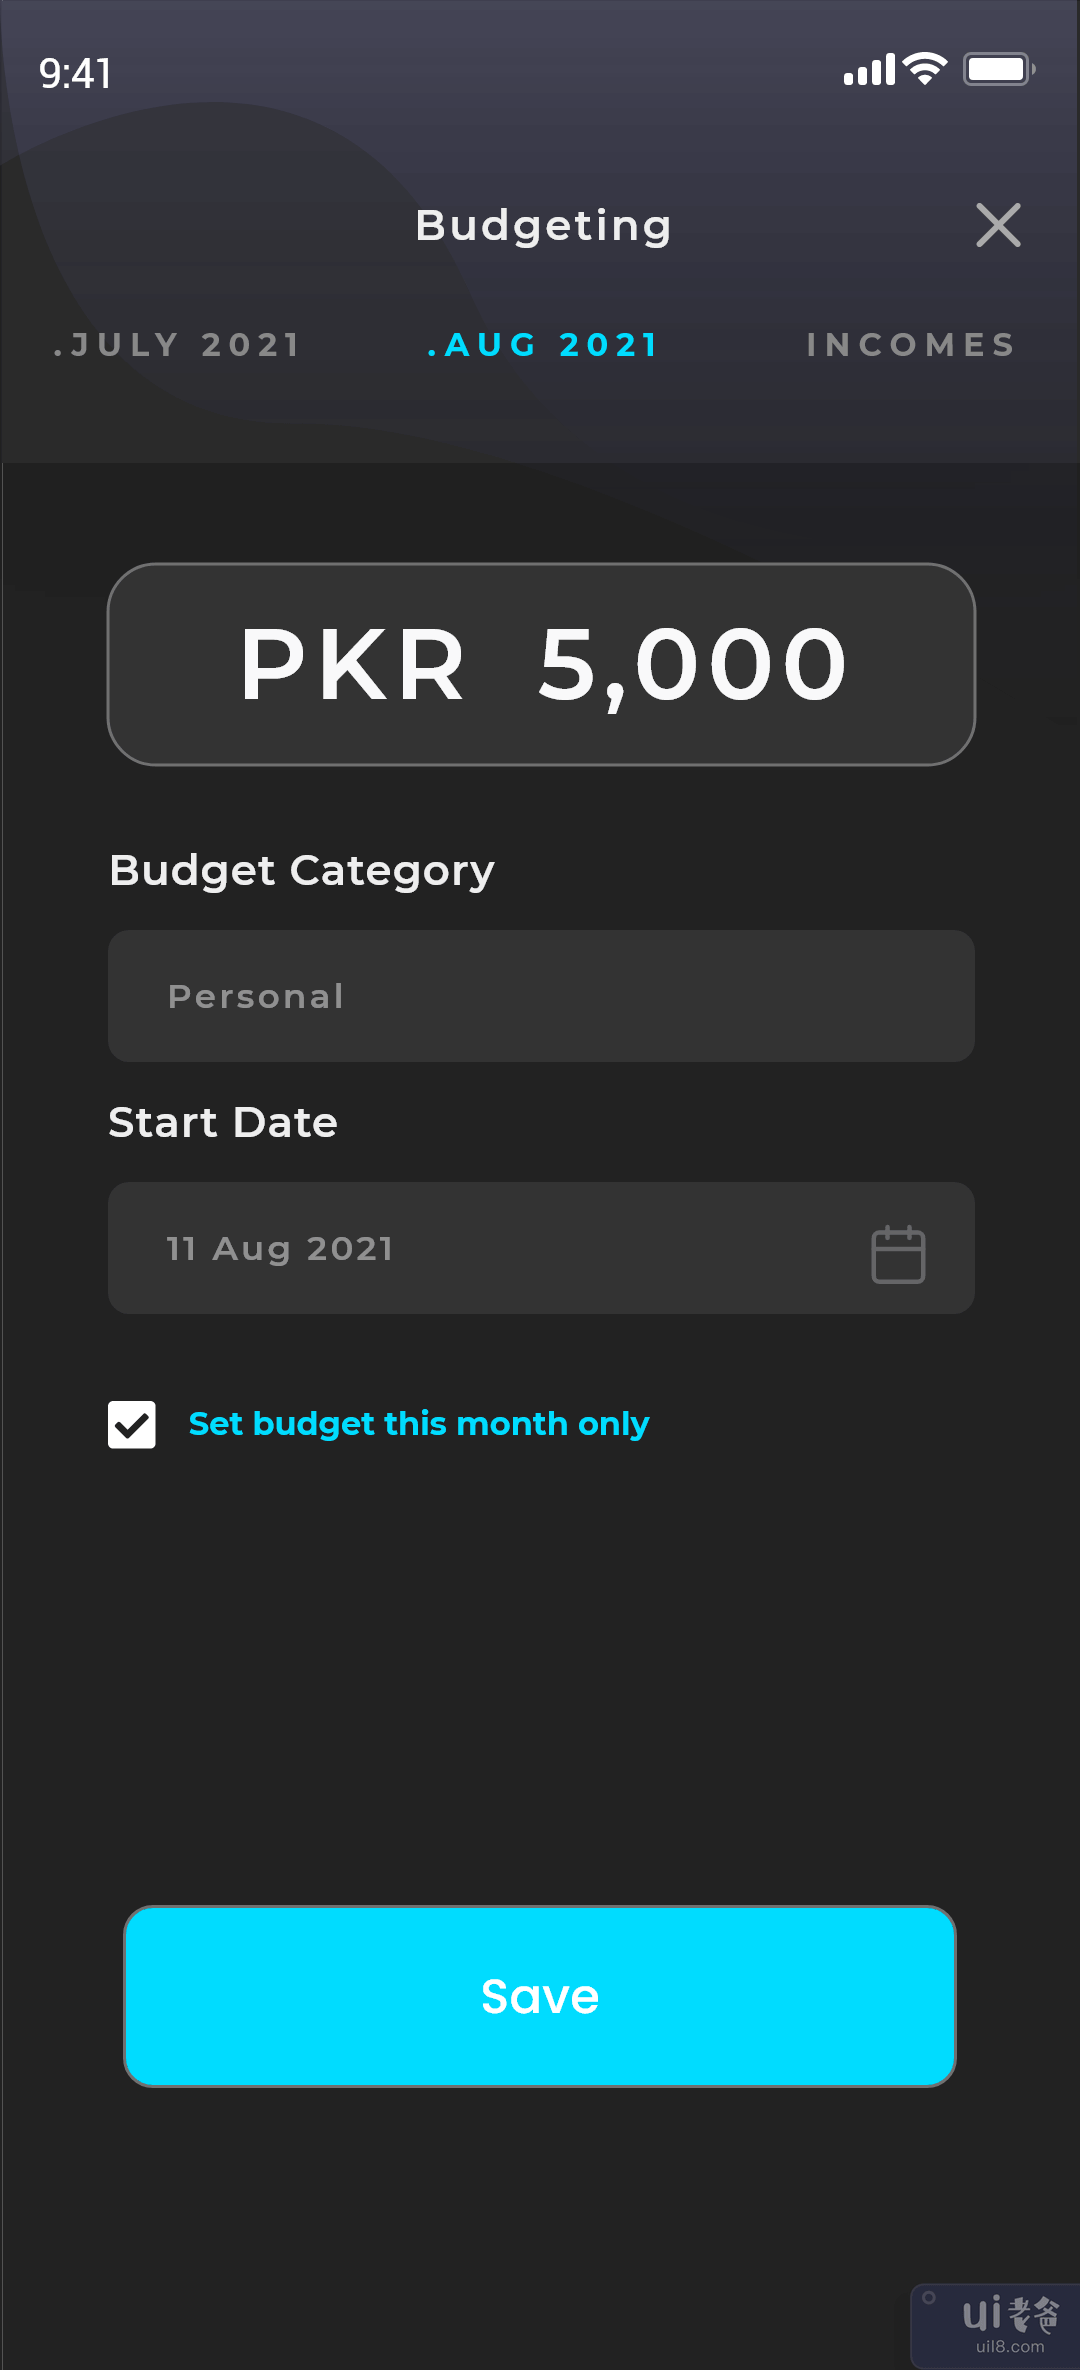 钱包应用挑战 - 预算规划器 iOS UI 套件(Wallet App Challenge - Budget Planner iOS UI Kit)插图